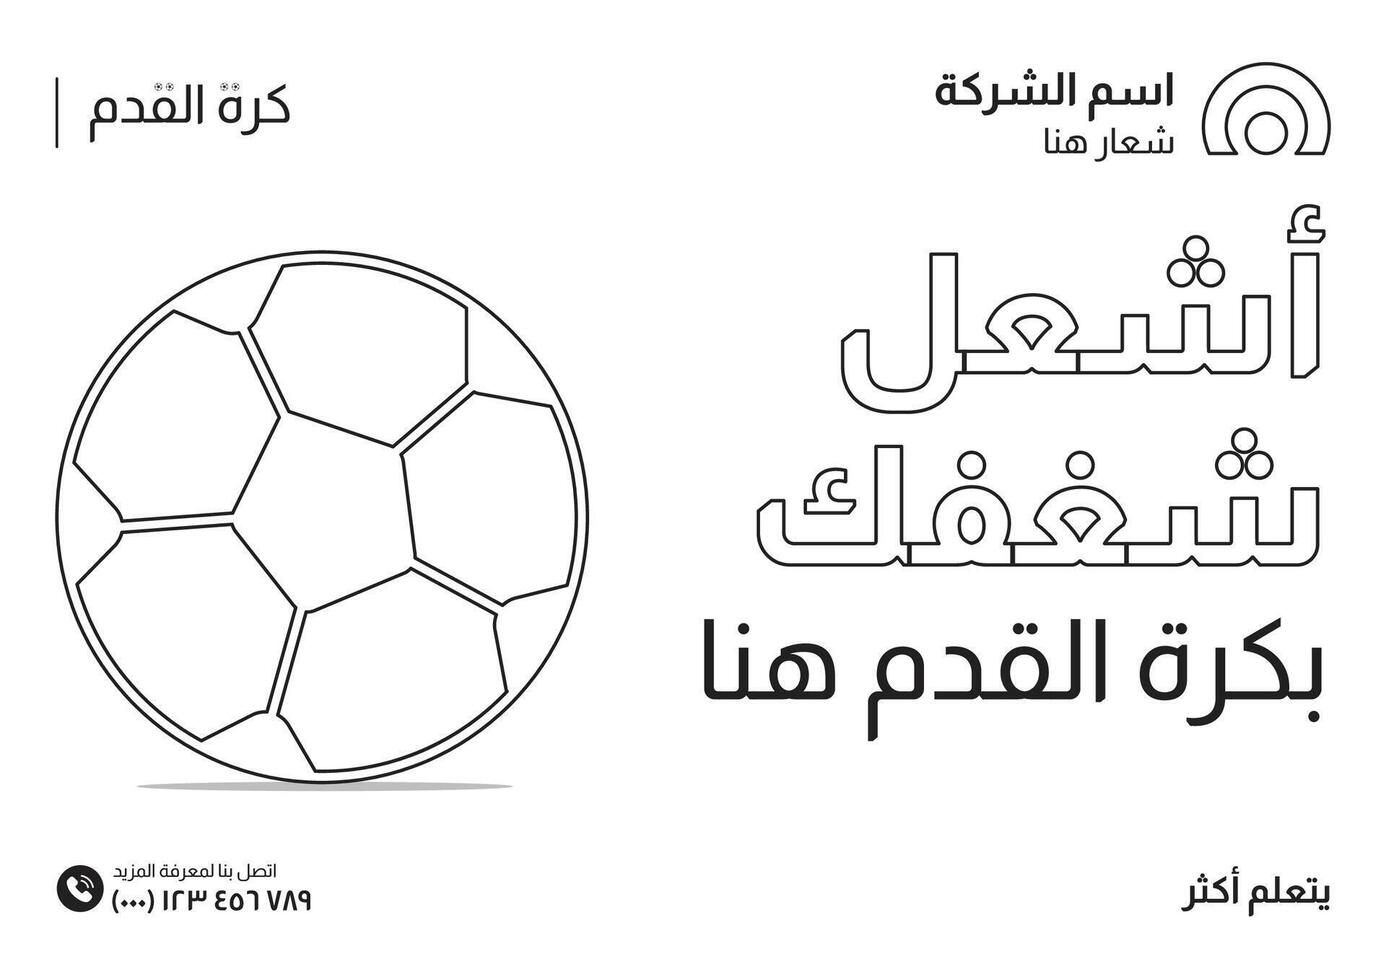 Football Company Social Media Banner Design in Arabic Style vector